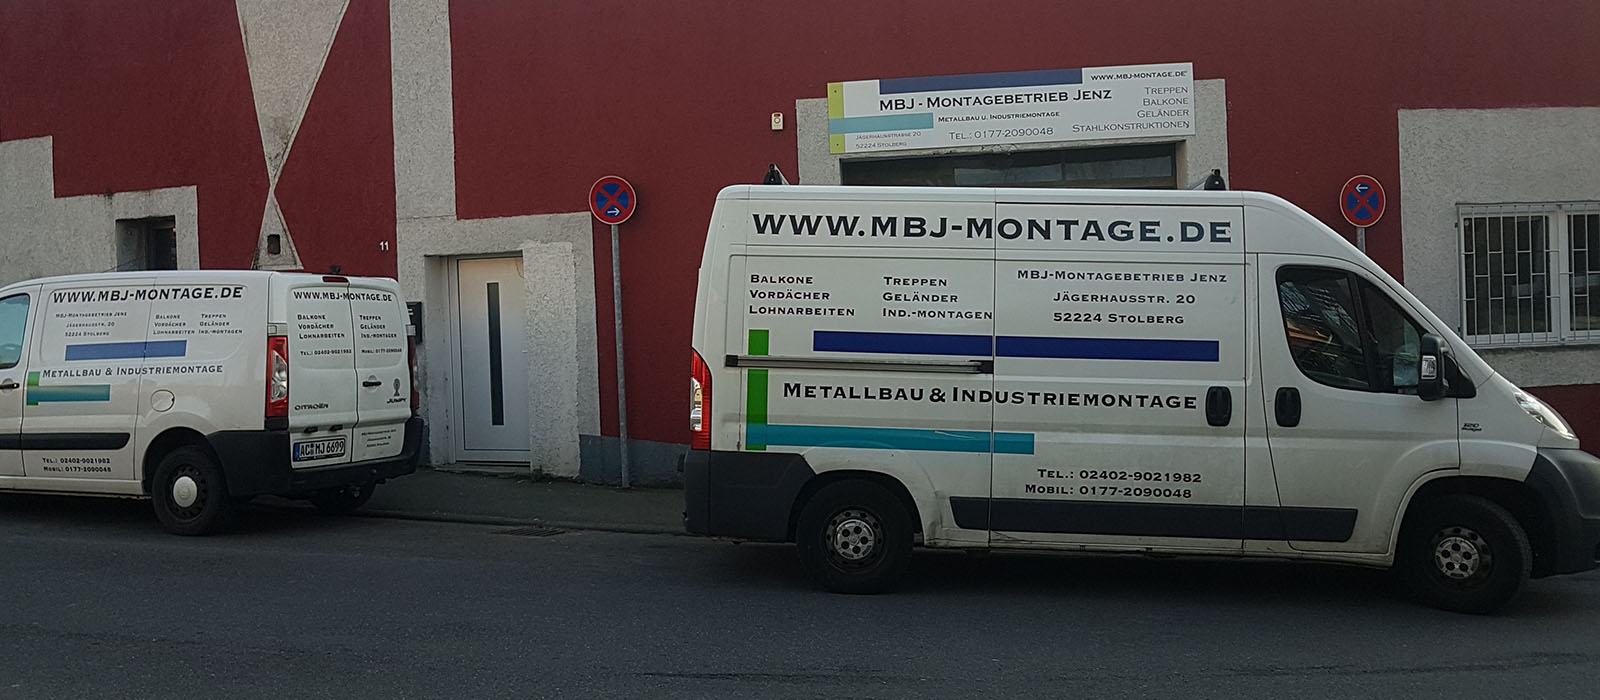 MBJ- Montagebetrieb M. Jenz, Metallbau u. Industriemontage